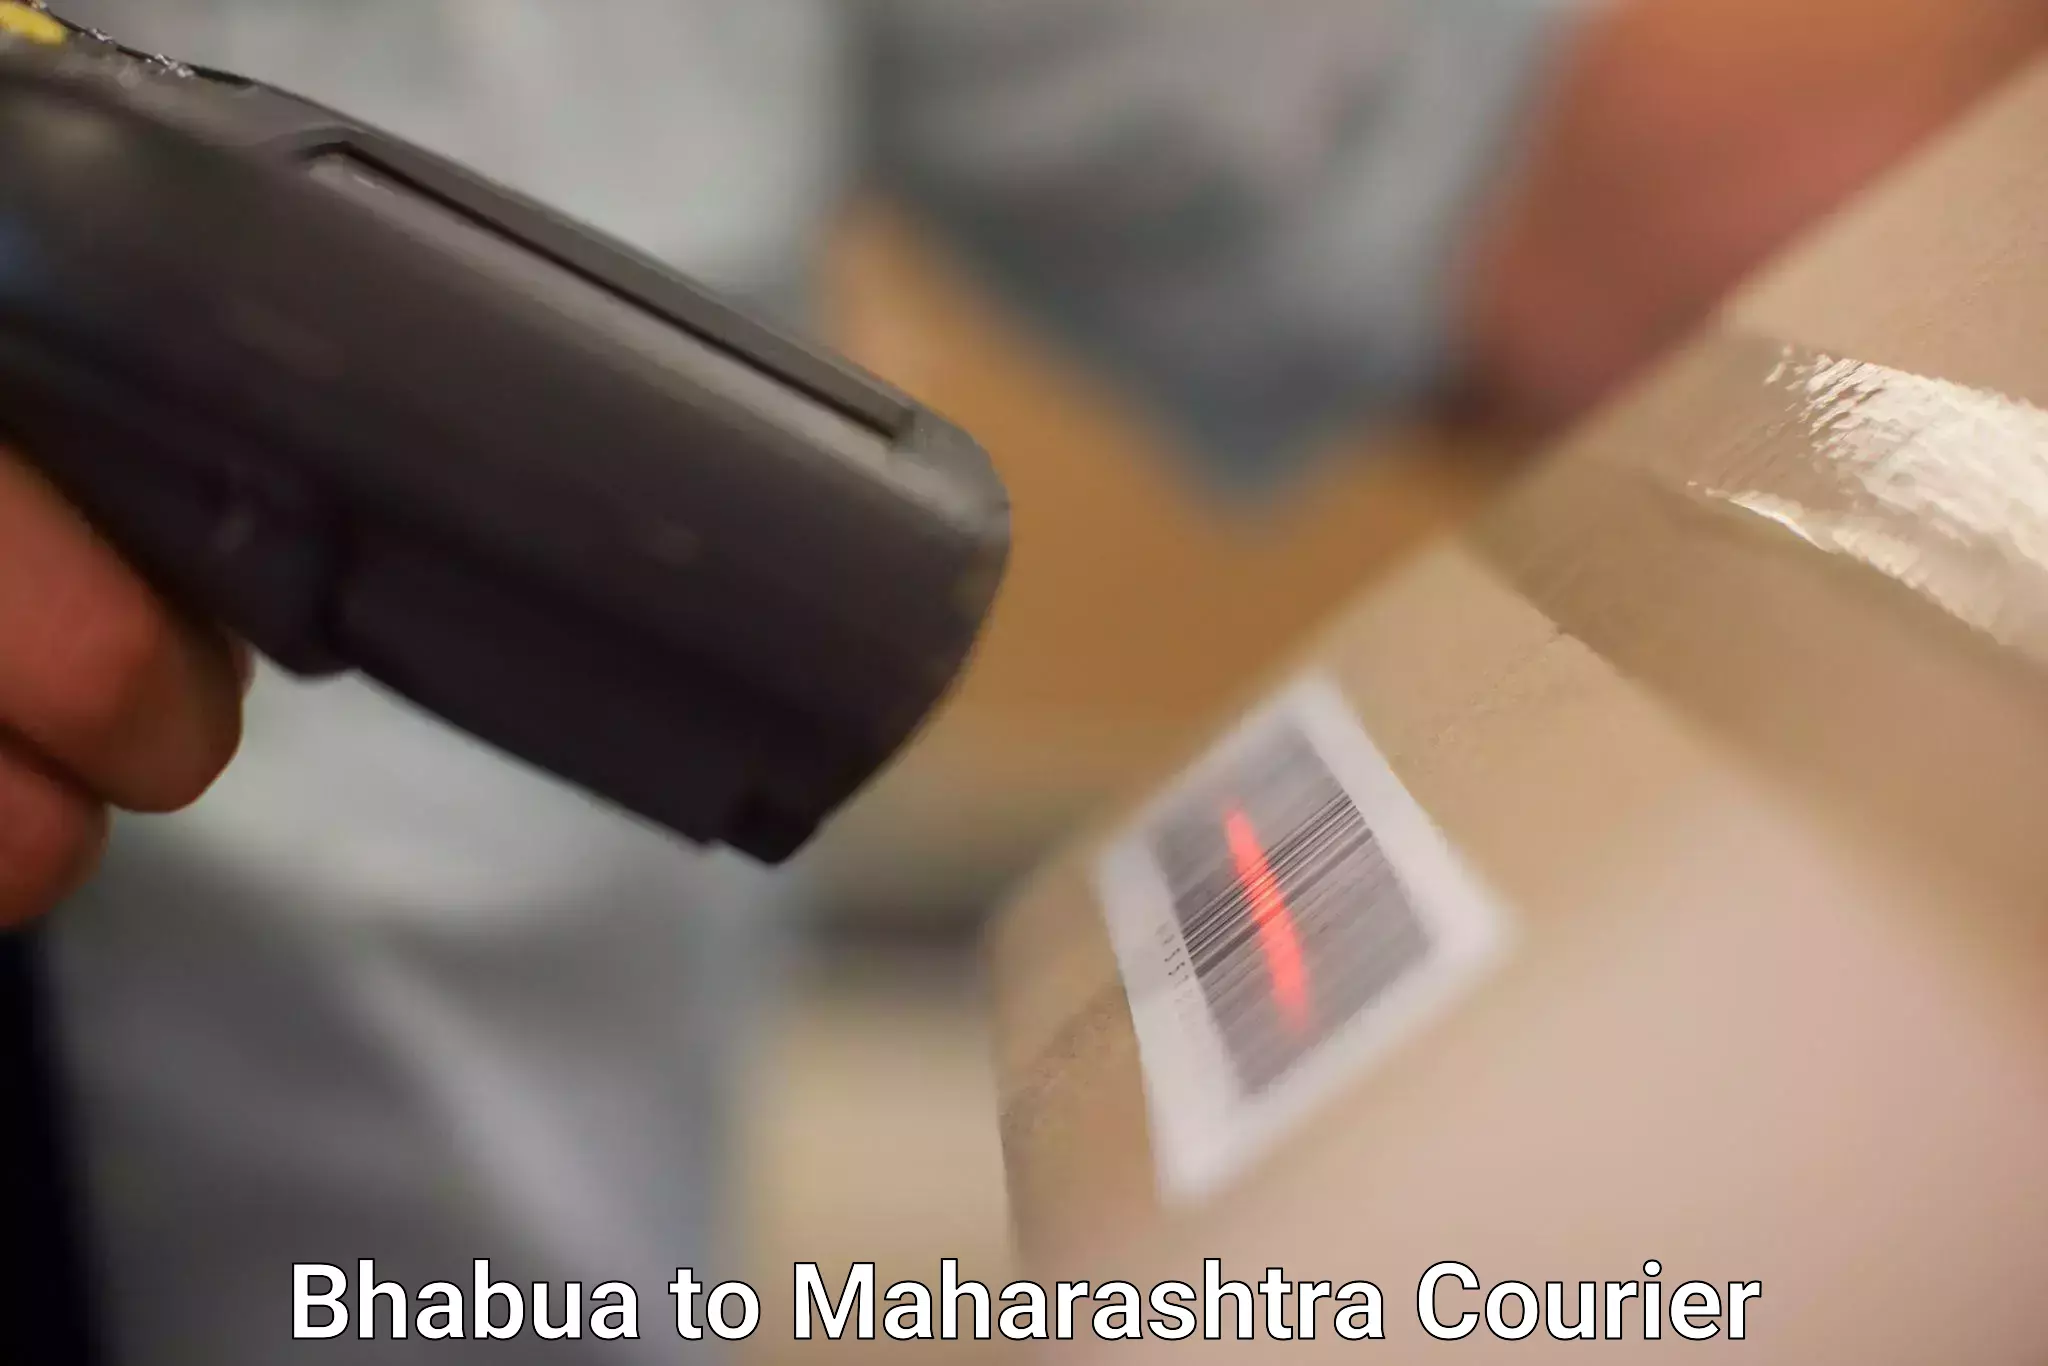 Courier service booking Bhabua to Navi Mumbai